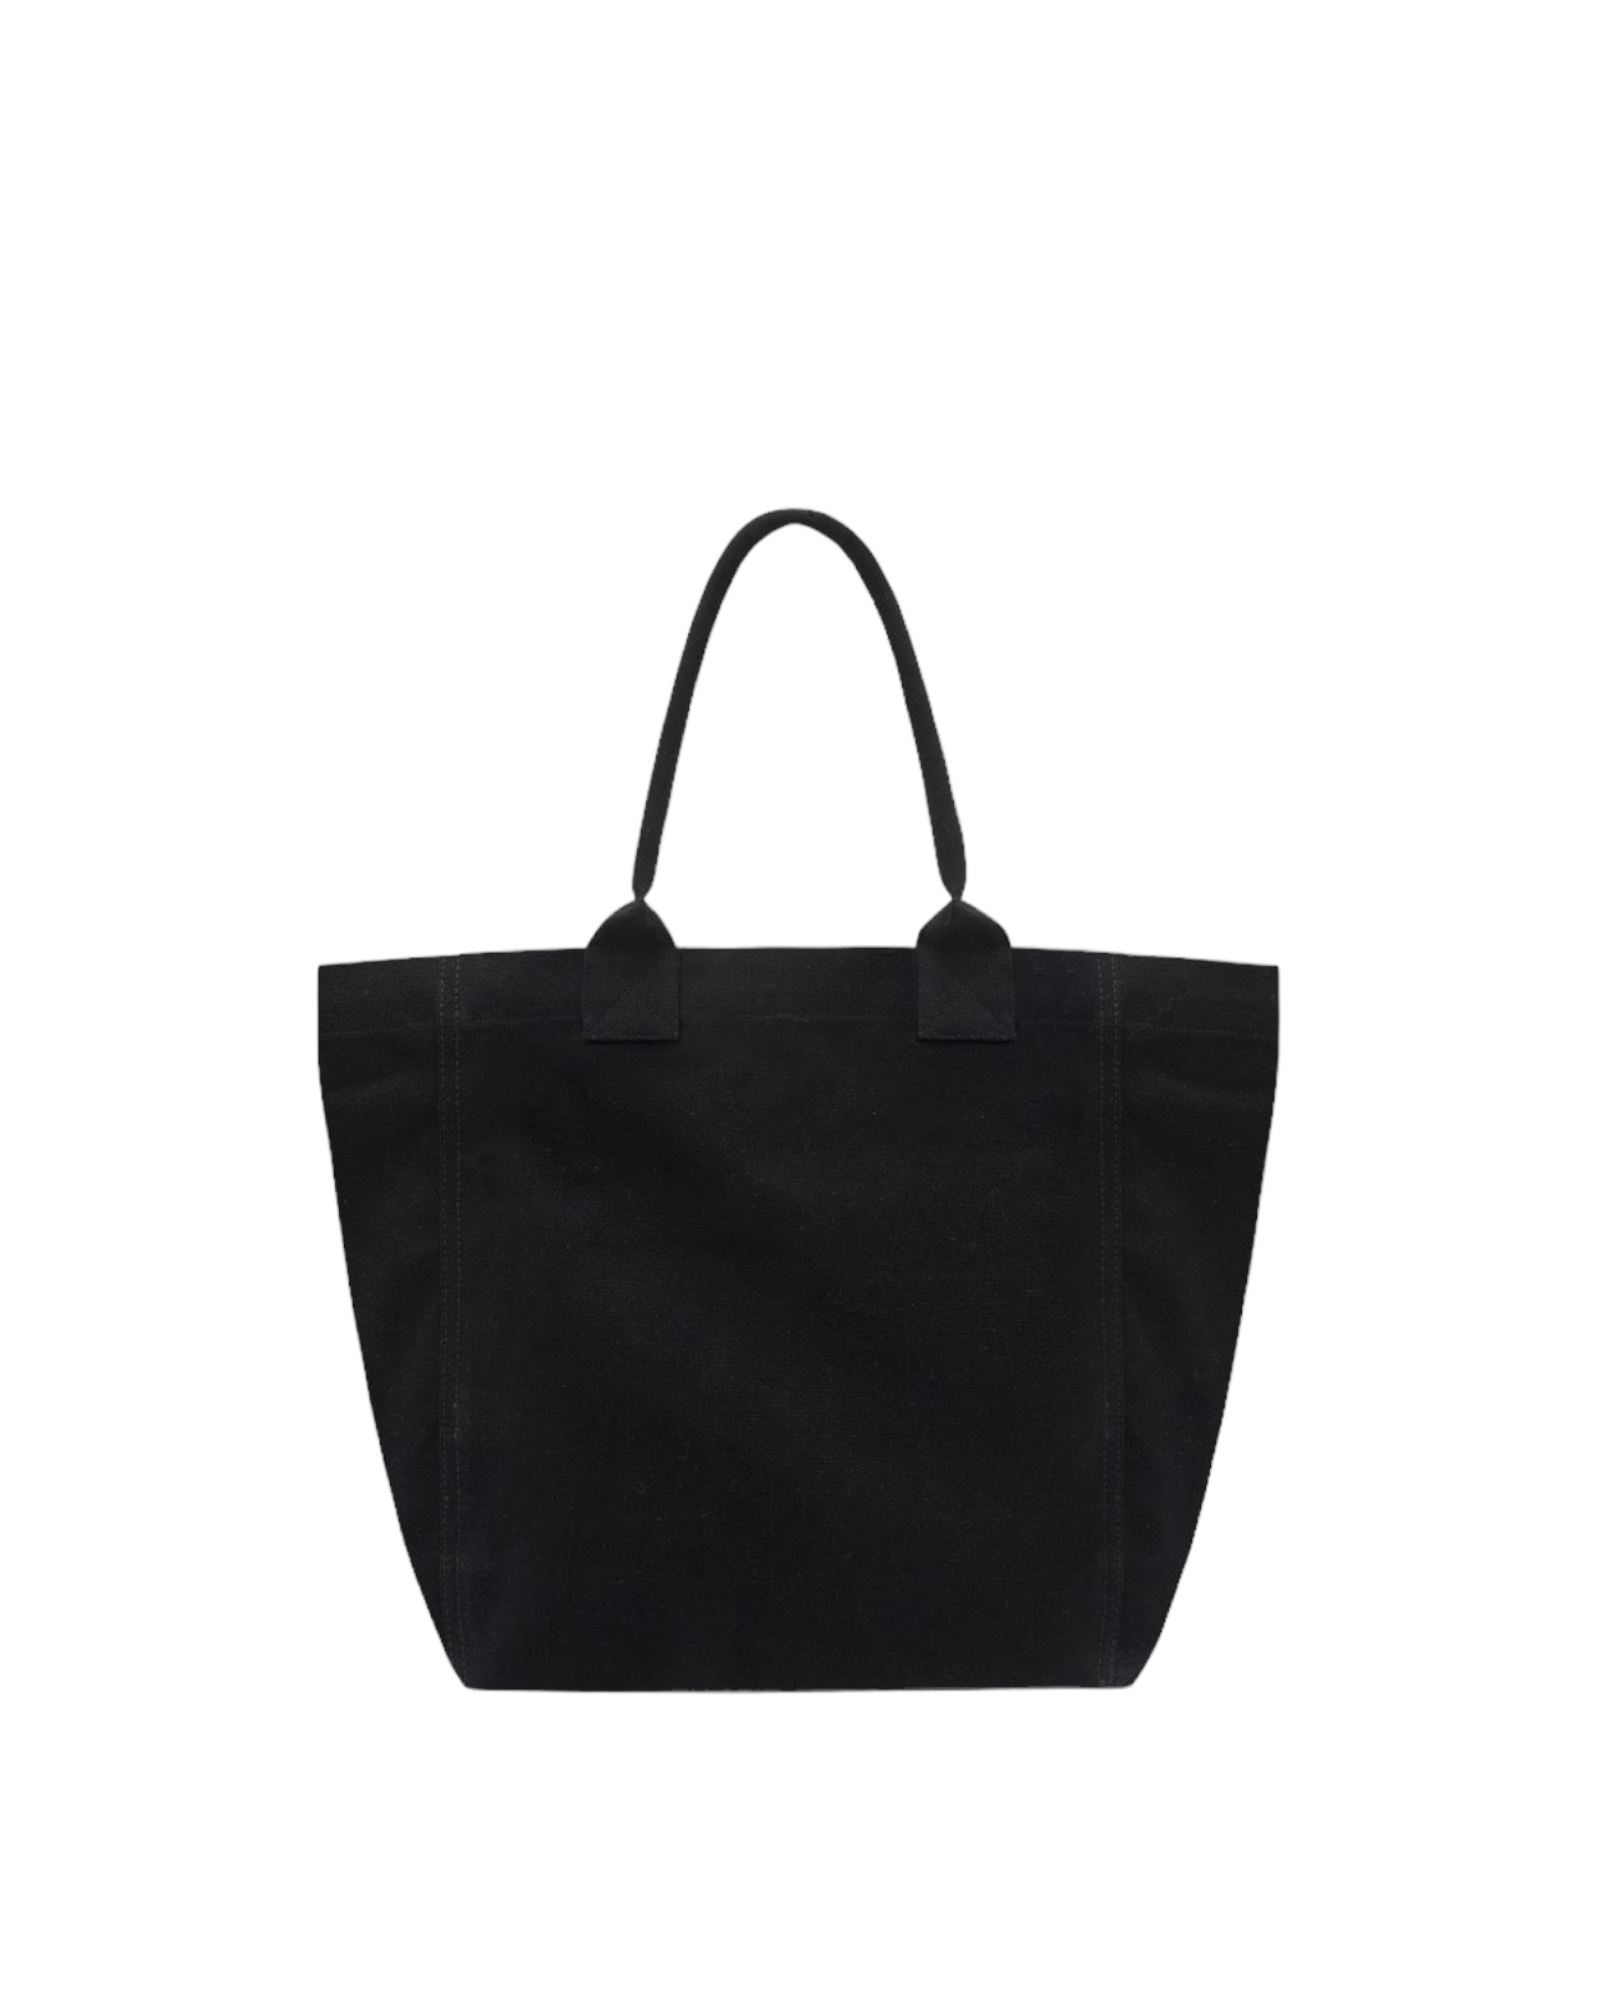 Tote-Bag Yenky small in black